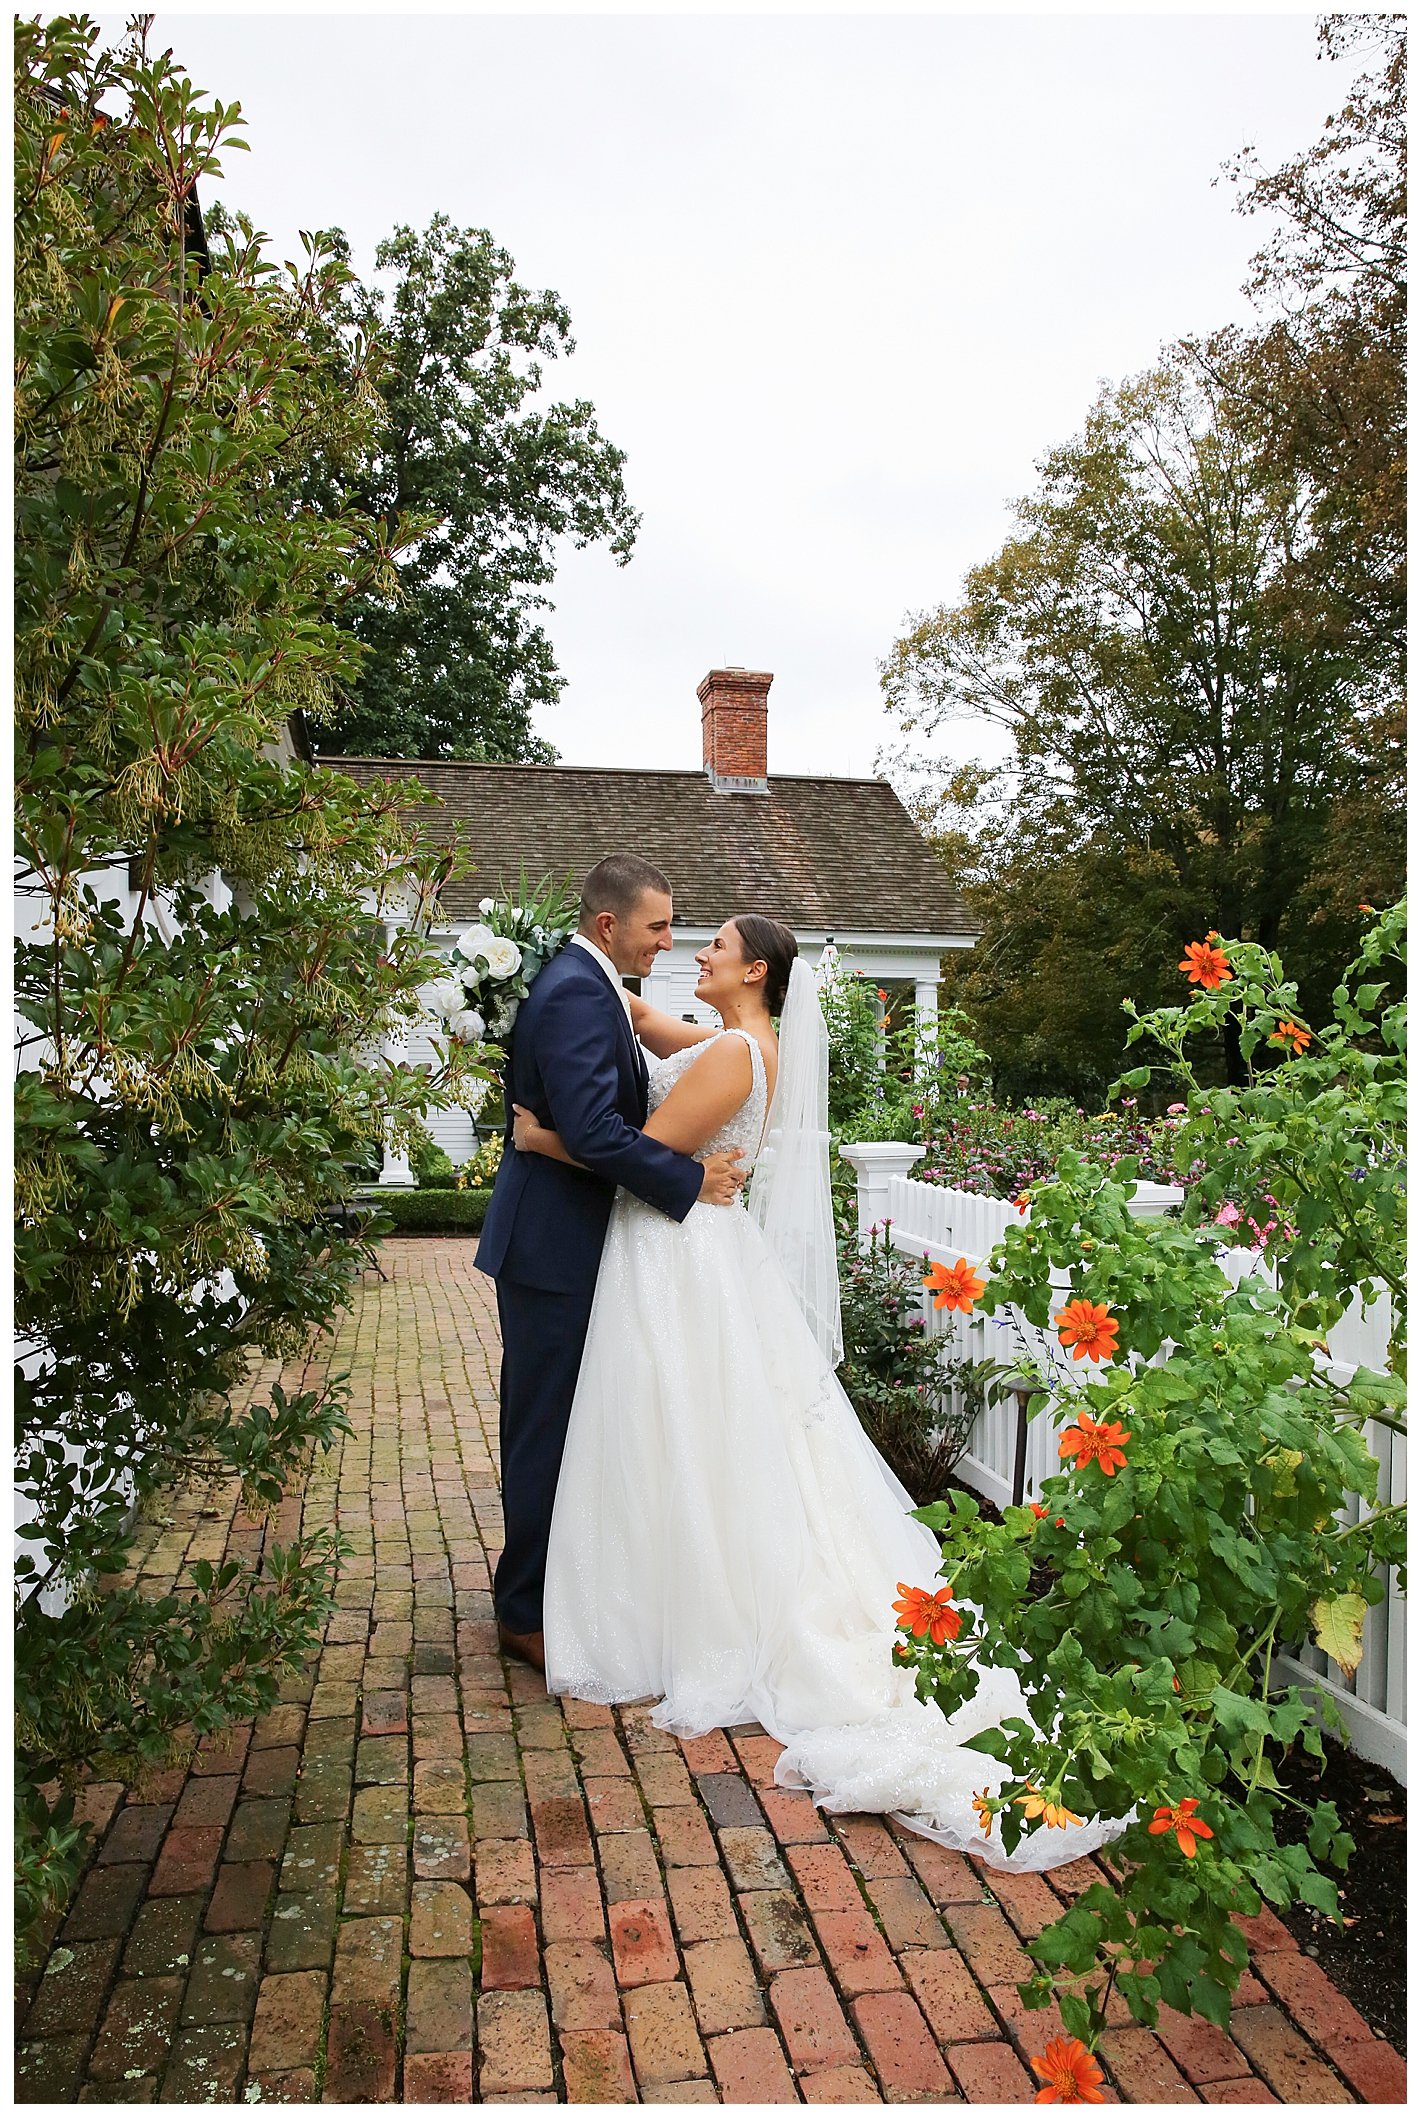 Sebastian Photography_Smith Farm Gardens Wedding_7016.jpg